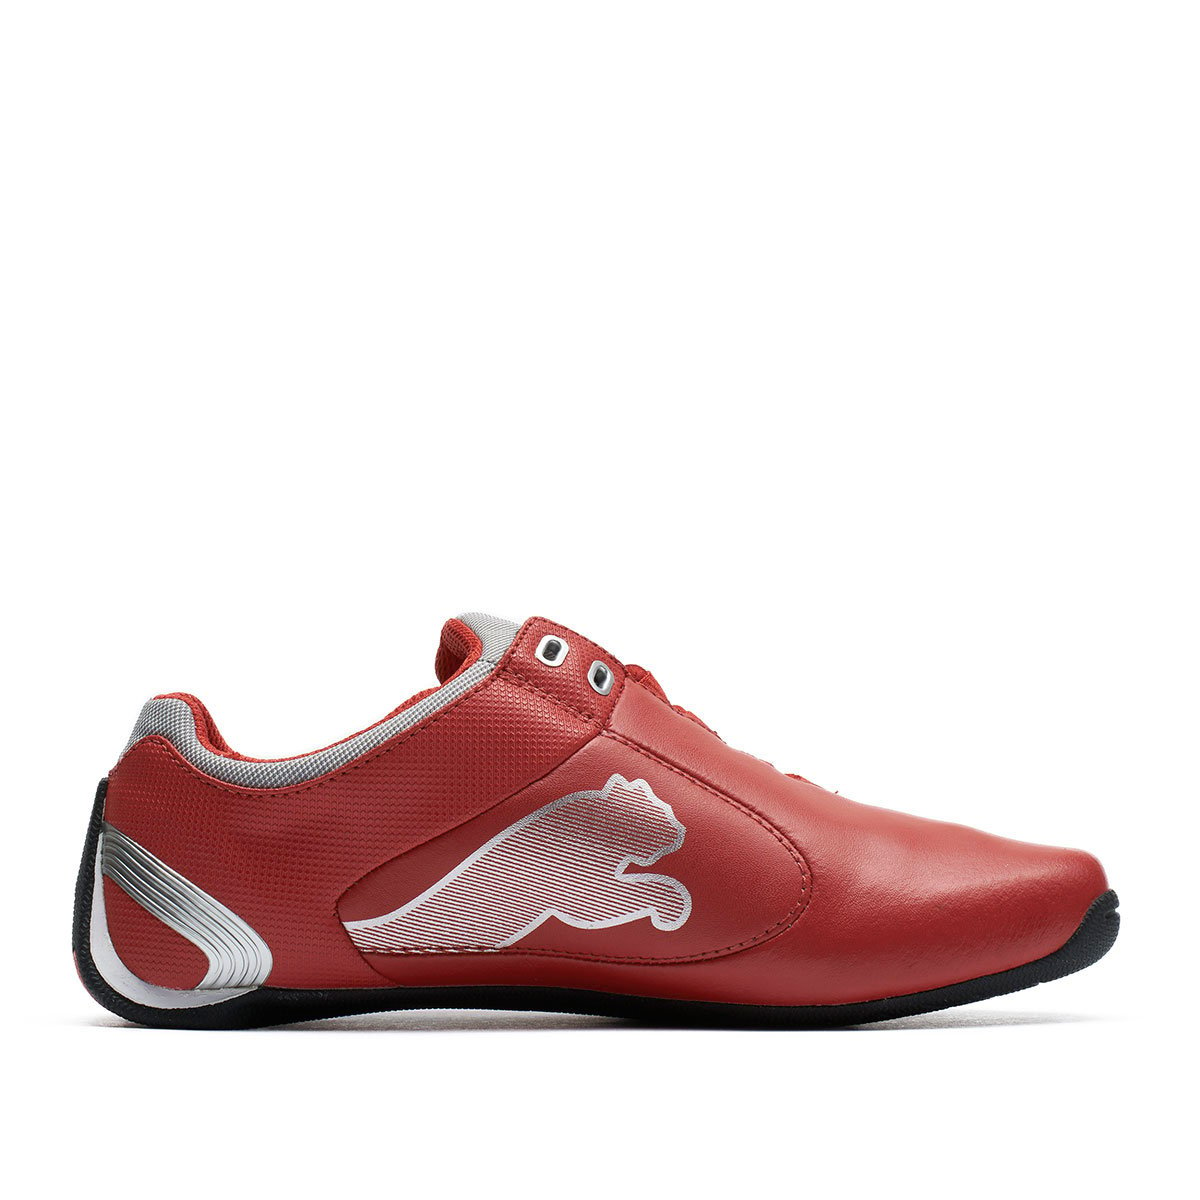 Puma Ferrari Future Cat M2 NM Jr red Детски спортни обувки 304296-01